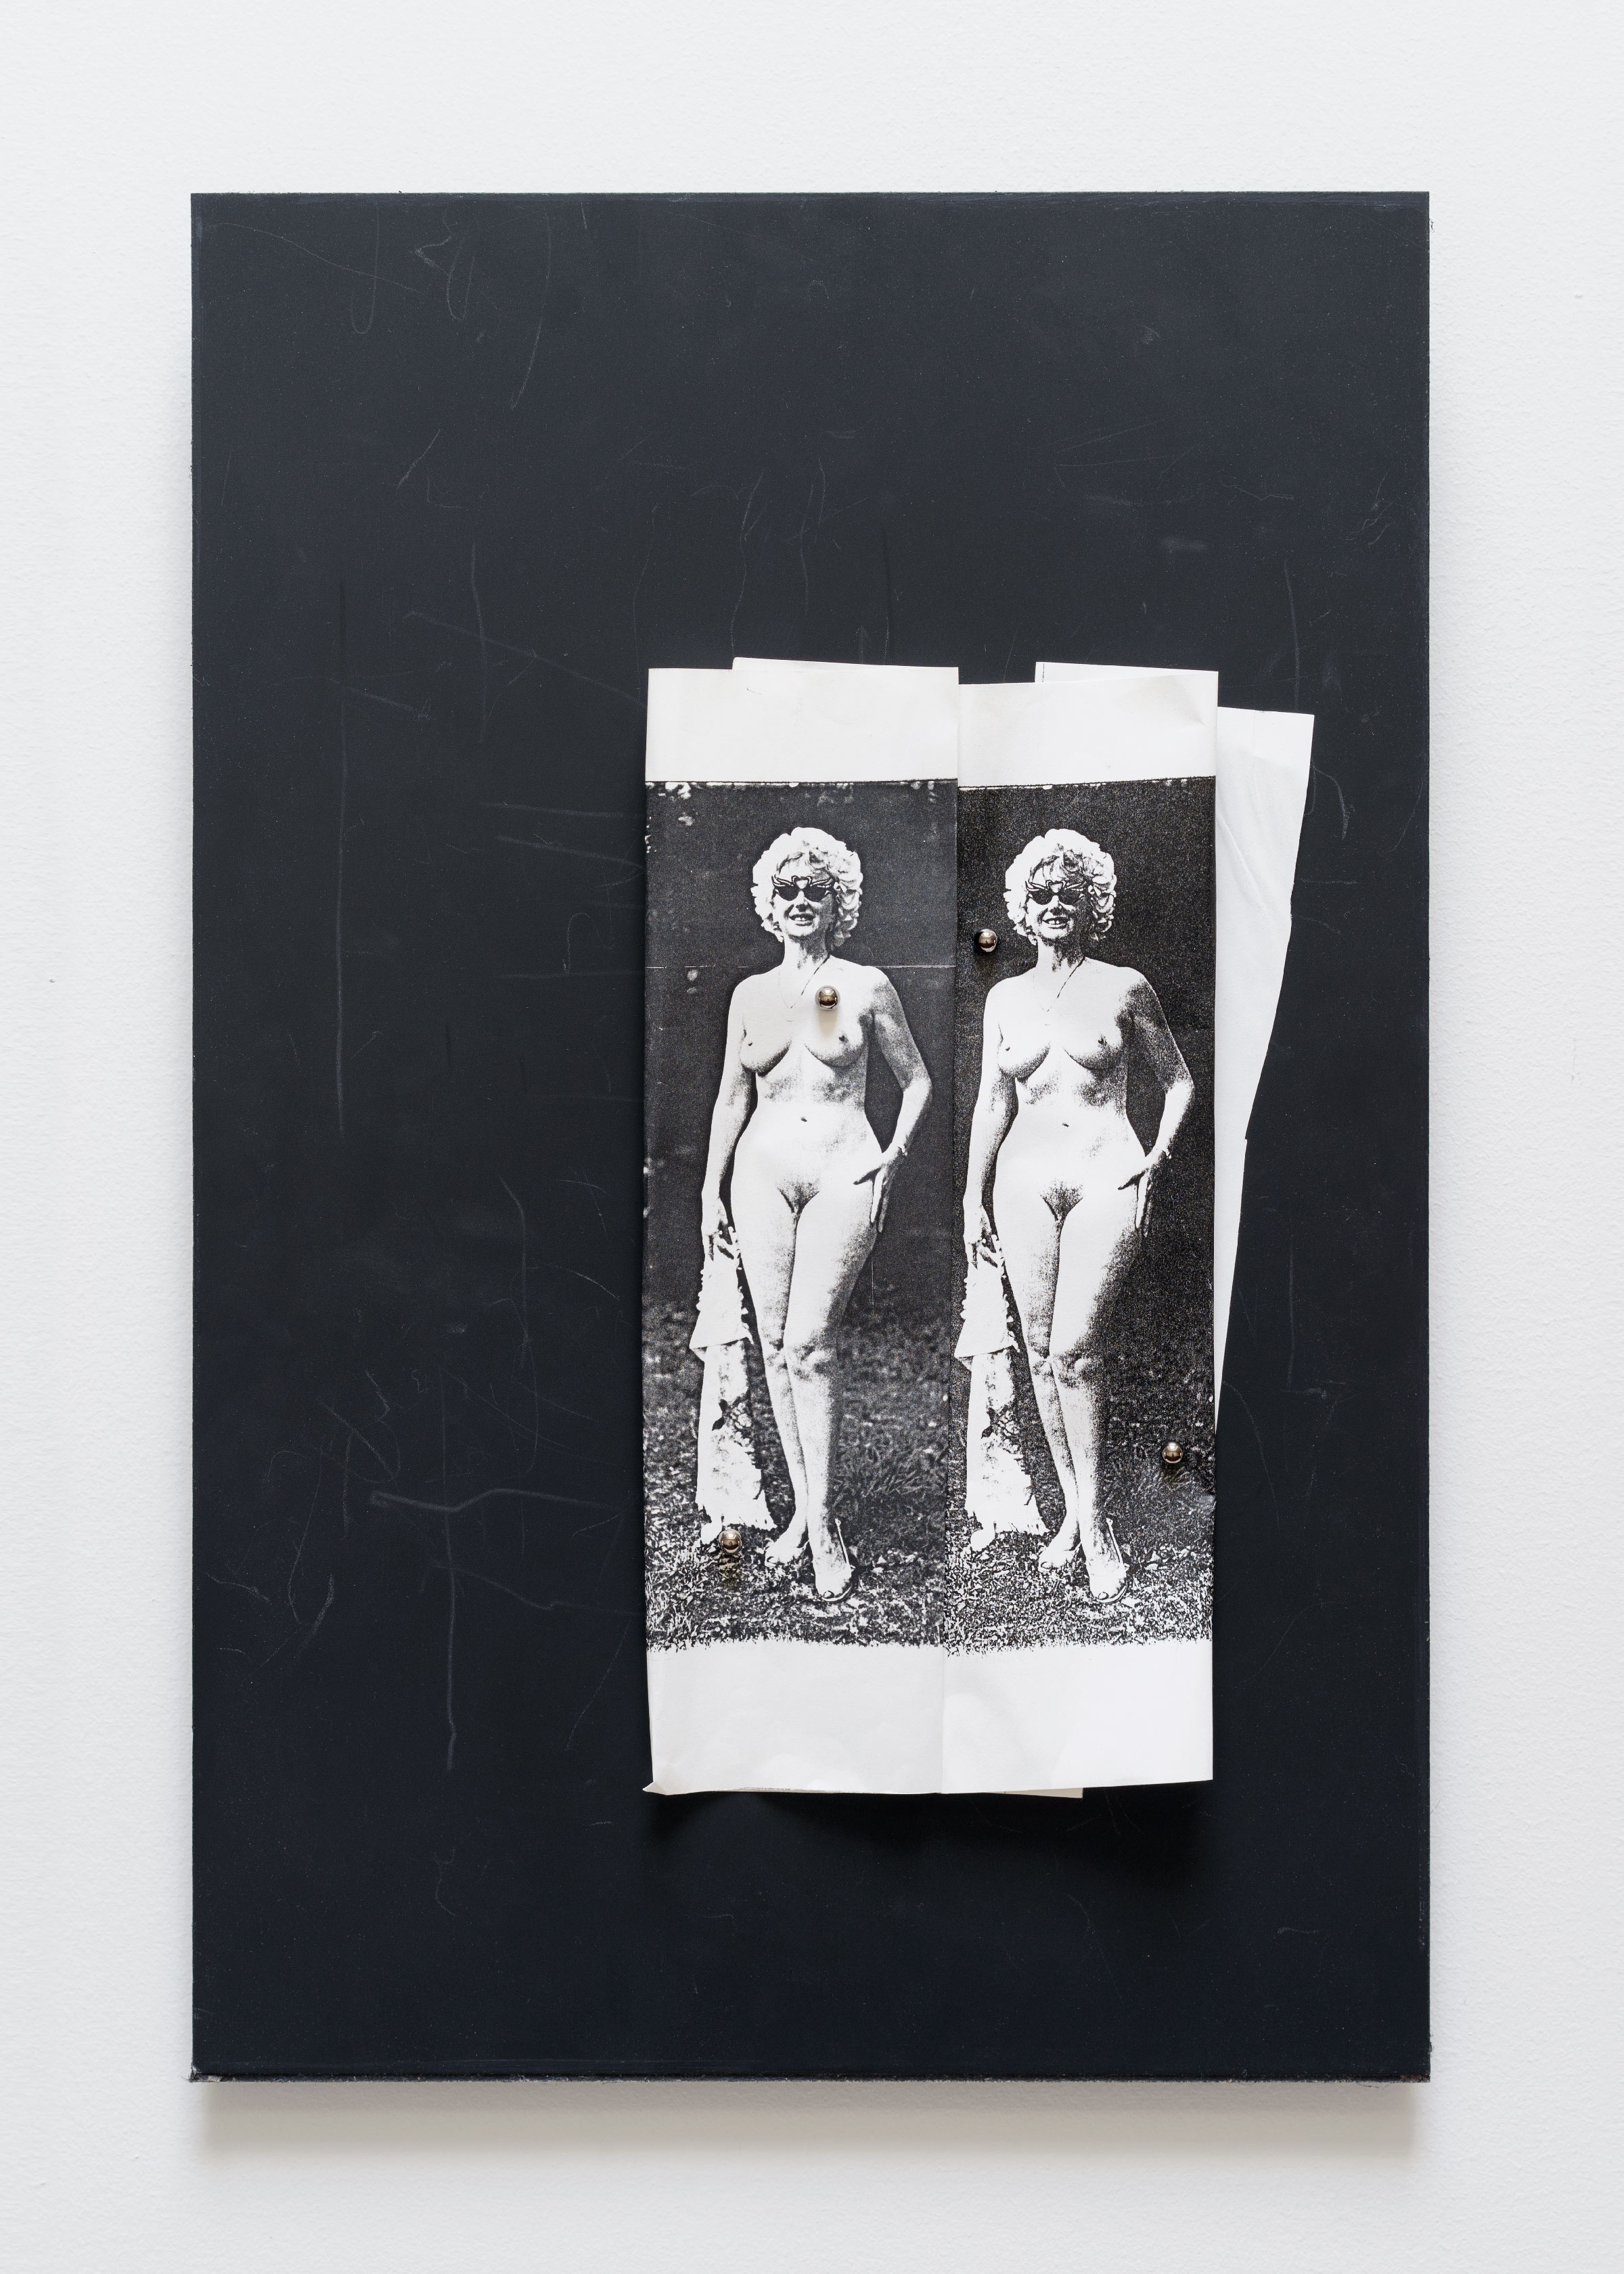 Gideon Barnett, 2015, 2 found photocopies, chalkboard, magnets, 18 x 12 in (50 x 76 cm)